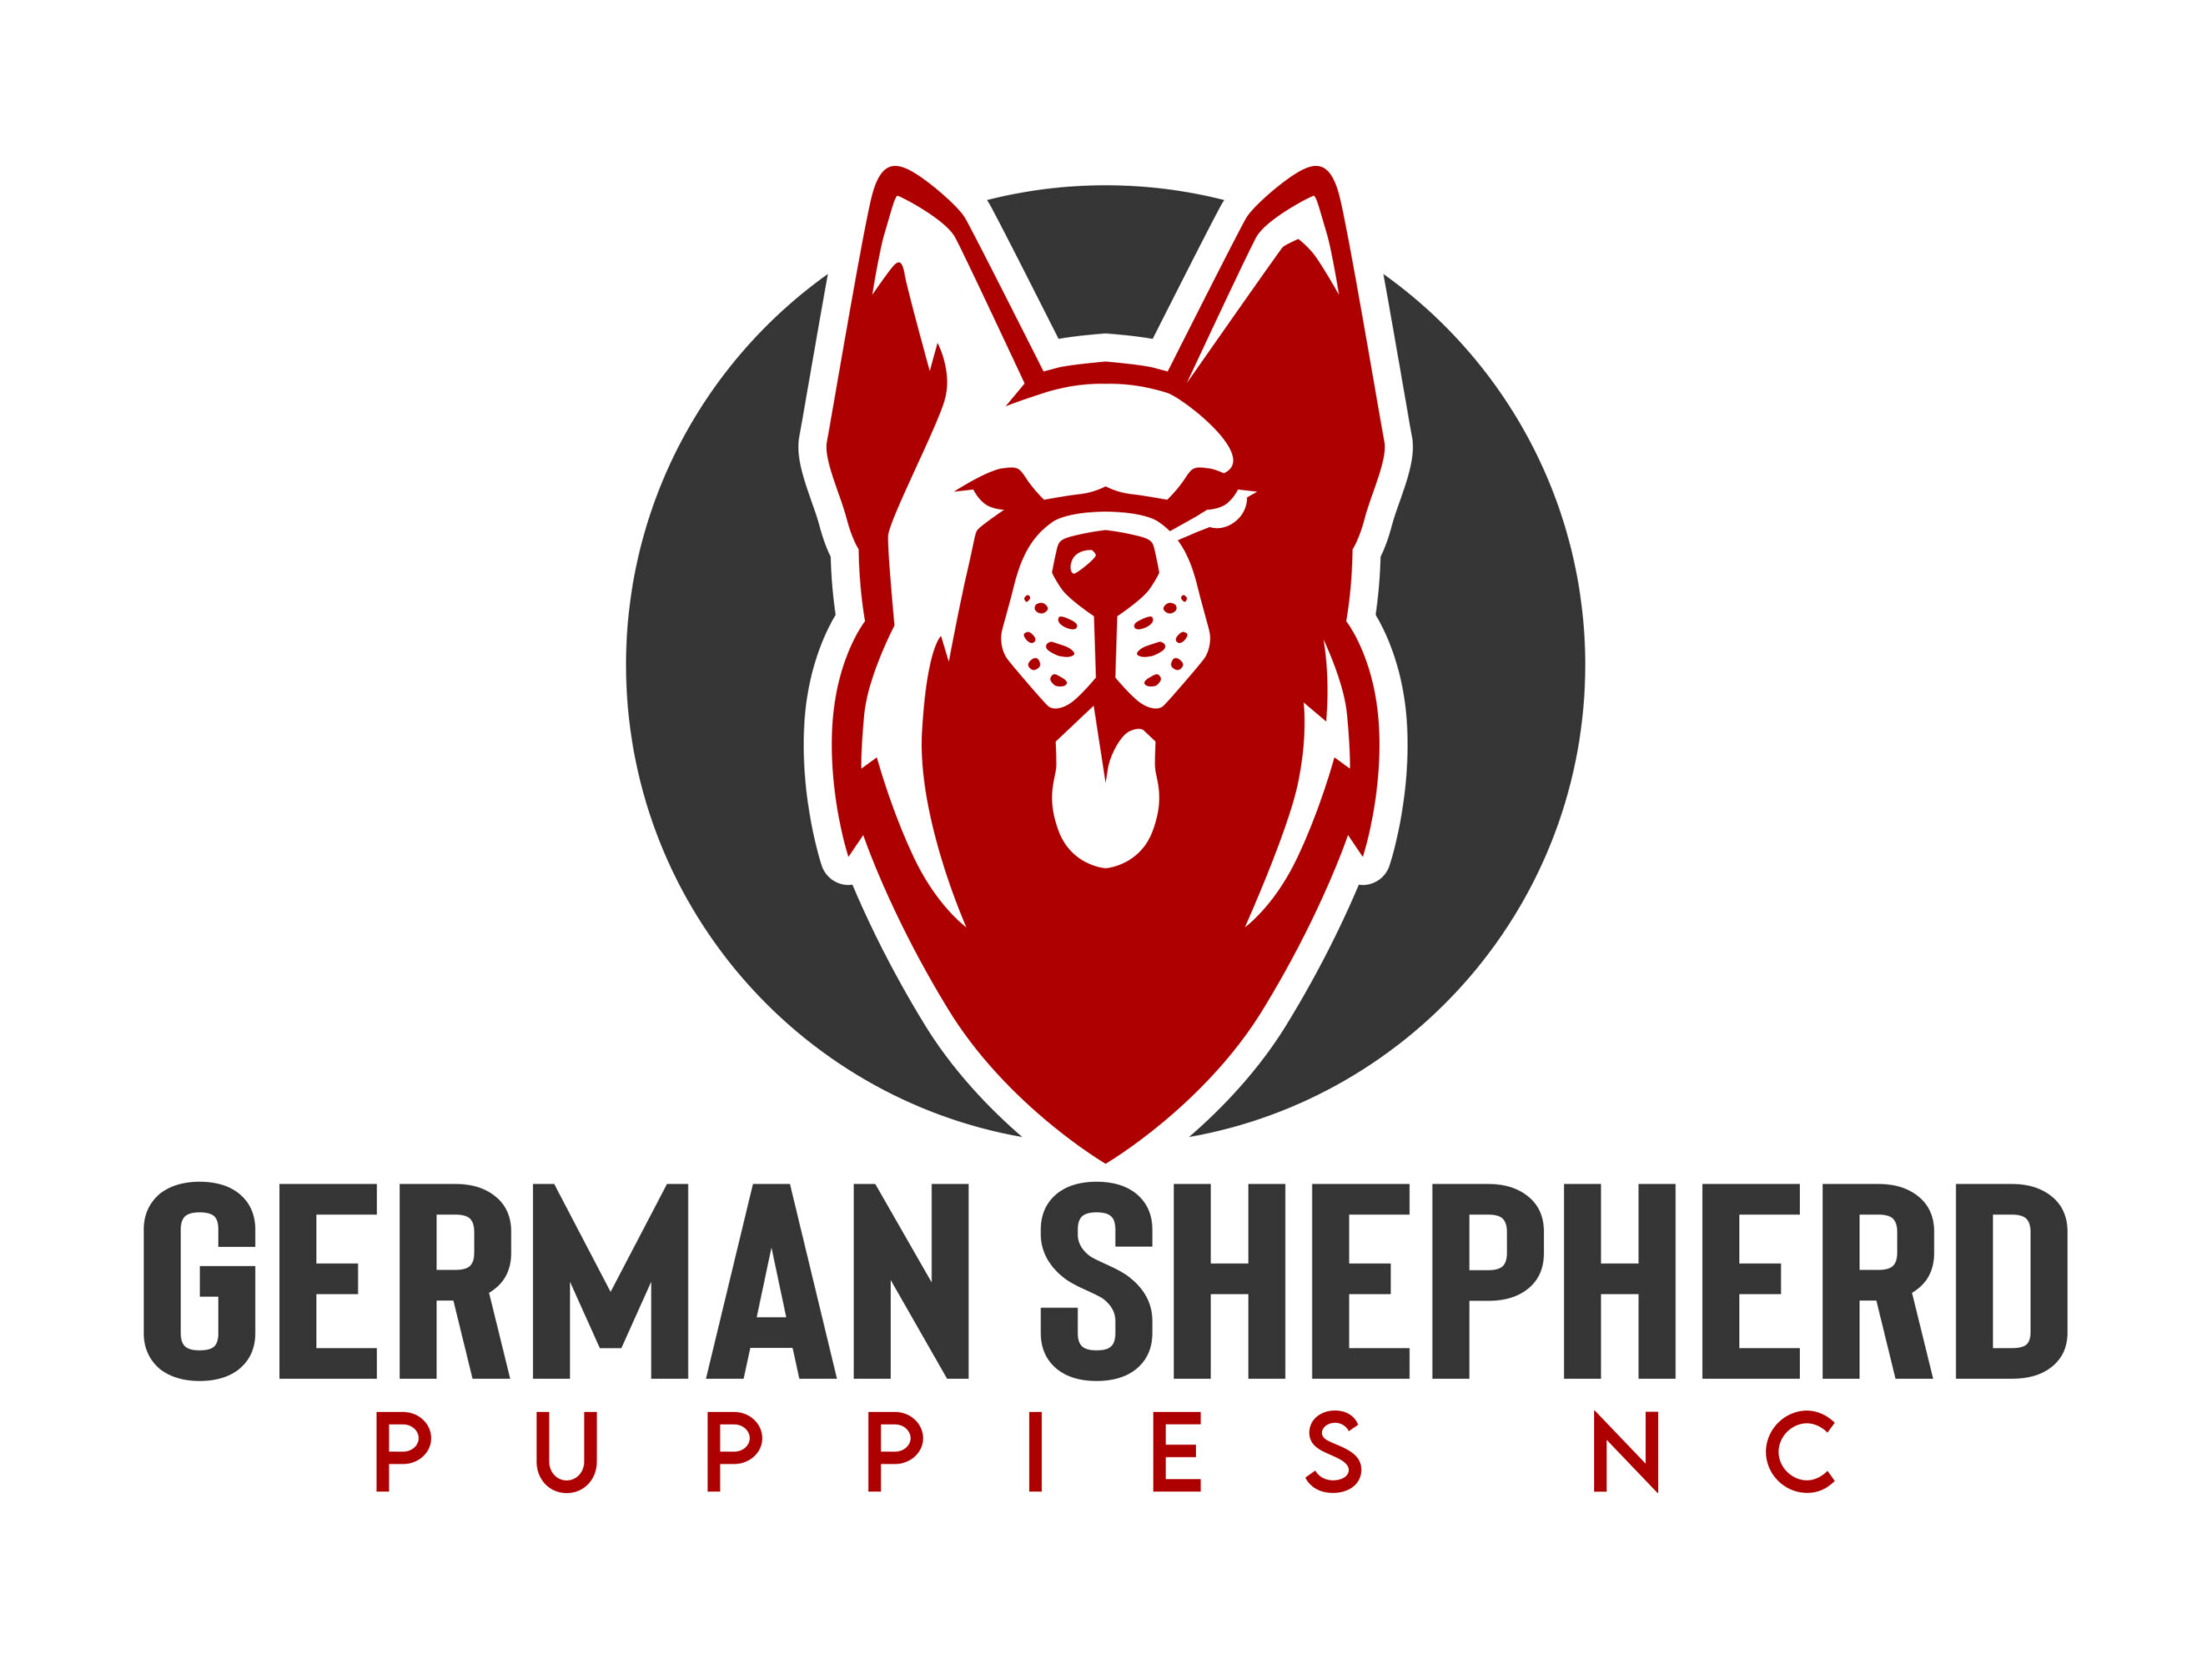 german shepherd puppies nc